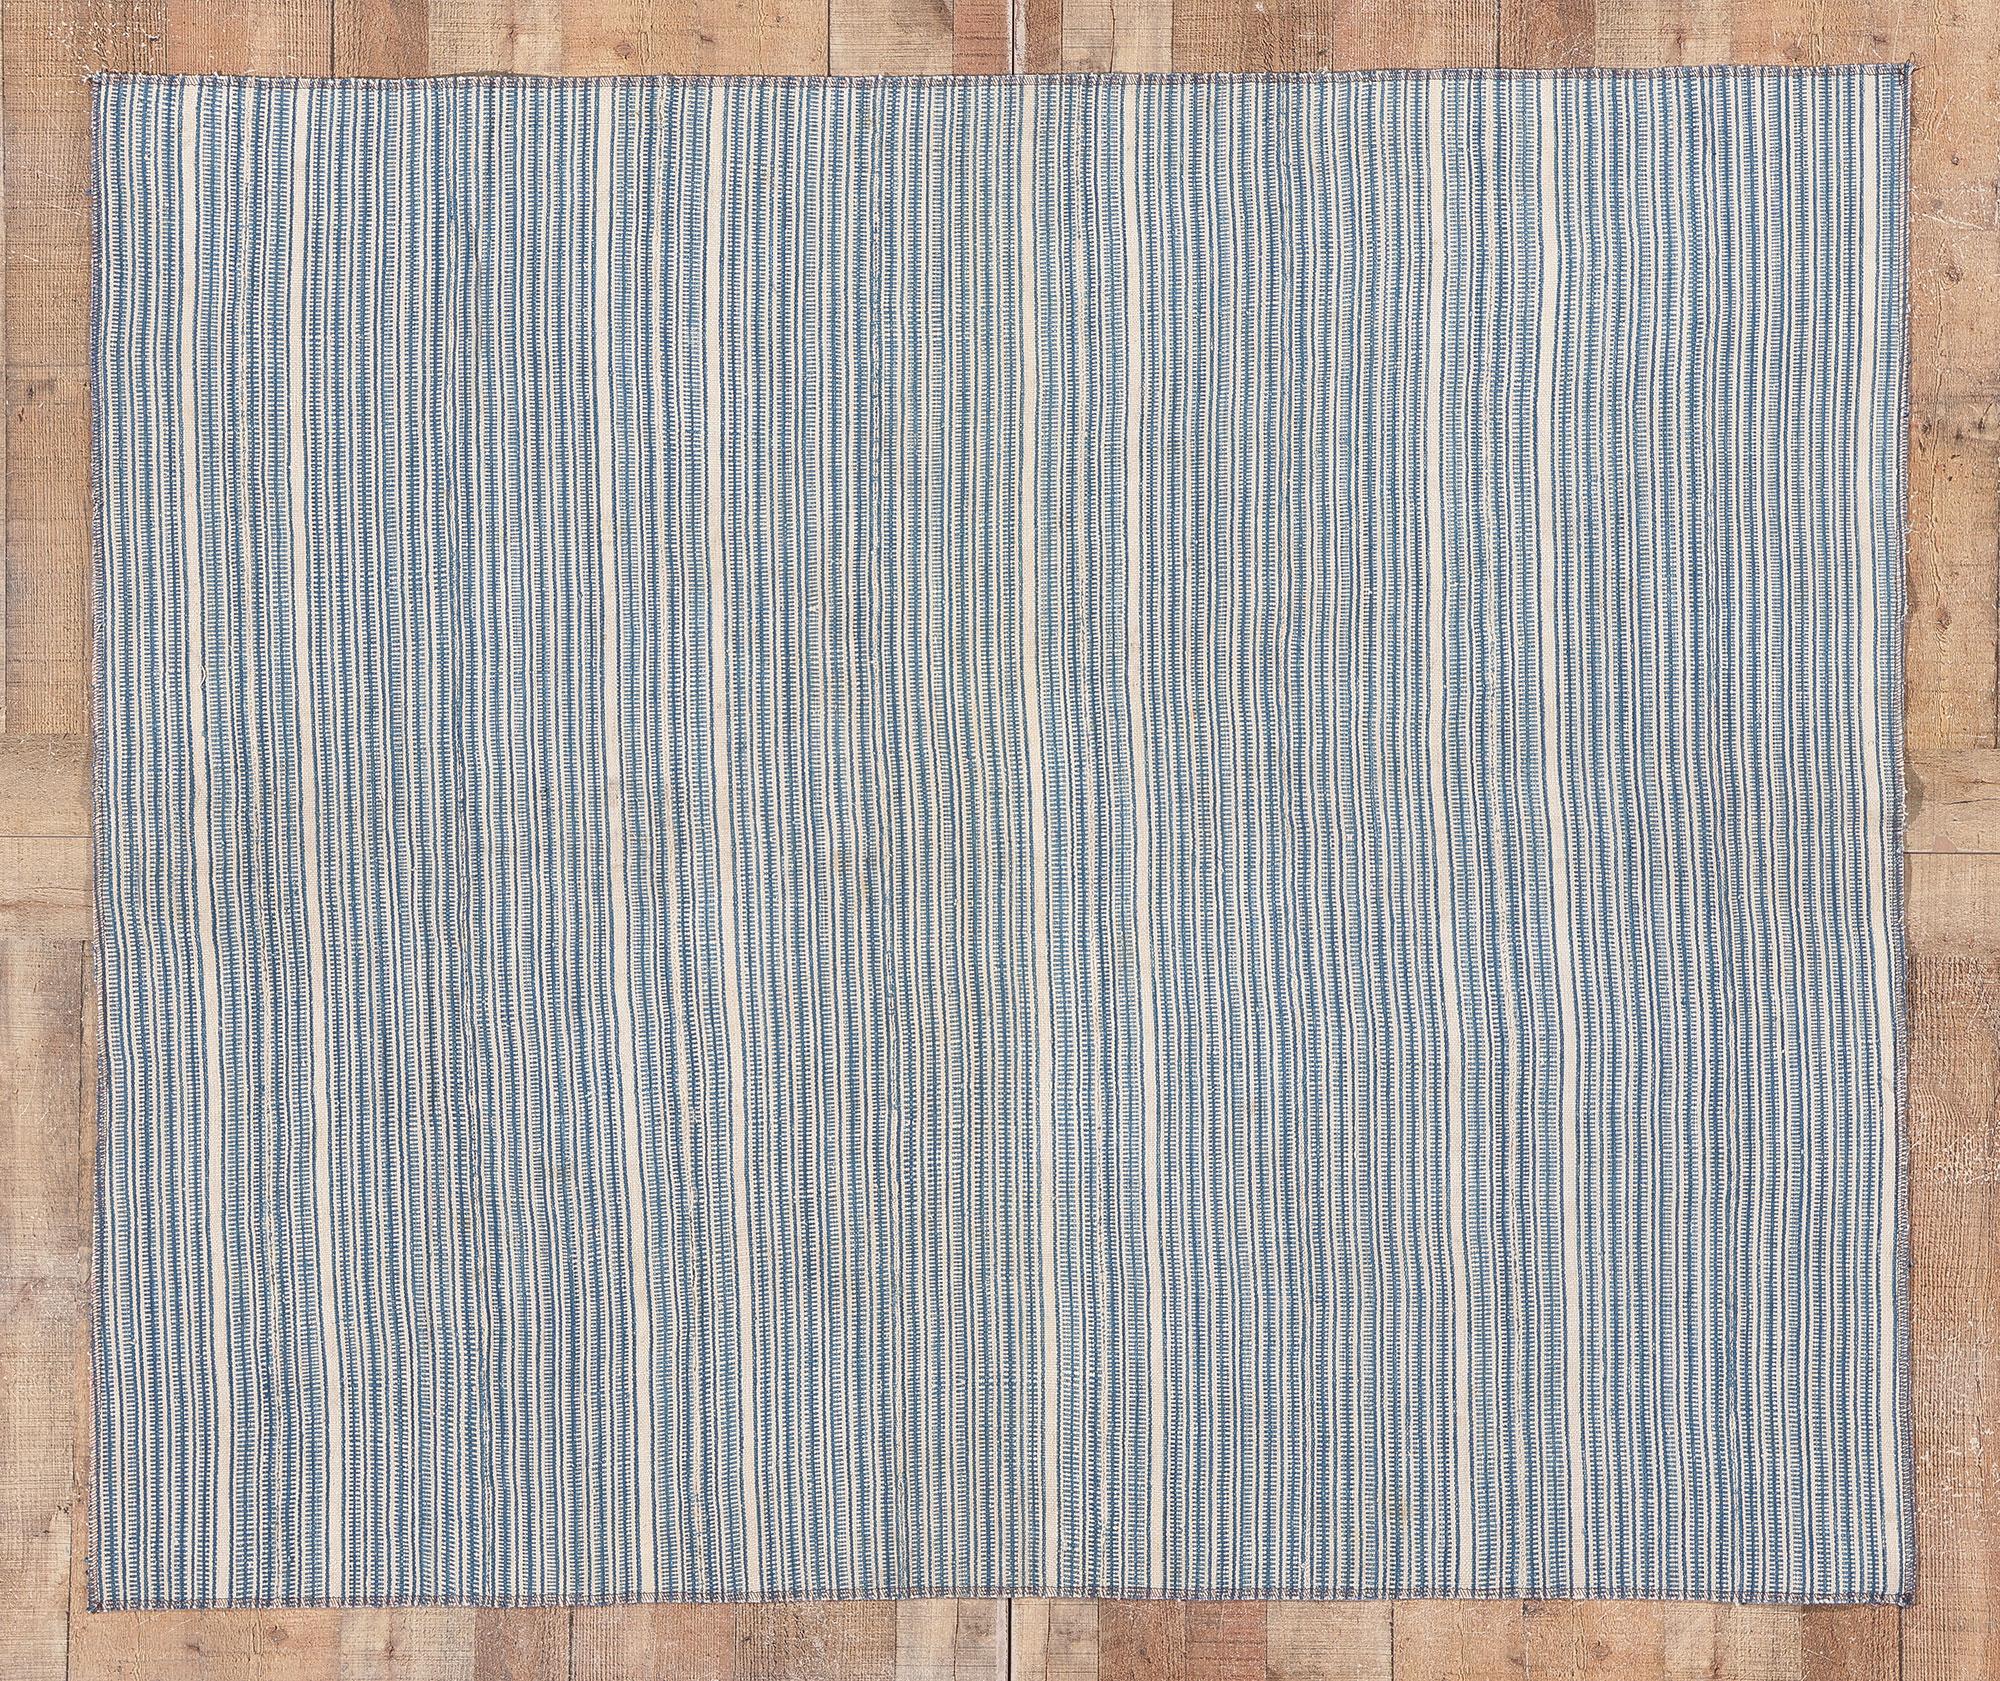 Blue and Ivory Crosshatch Stripe Kilim Rug, Casually Chic Coastal Style 1